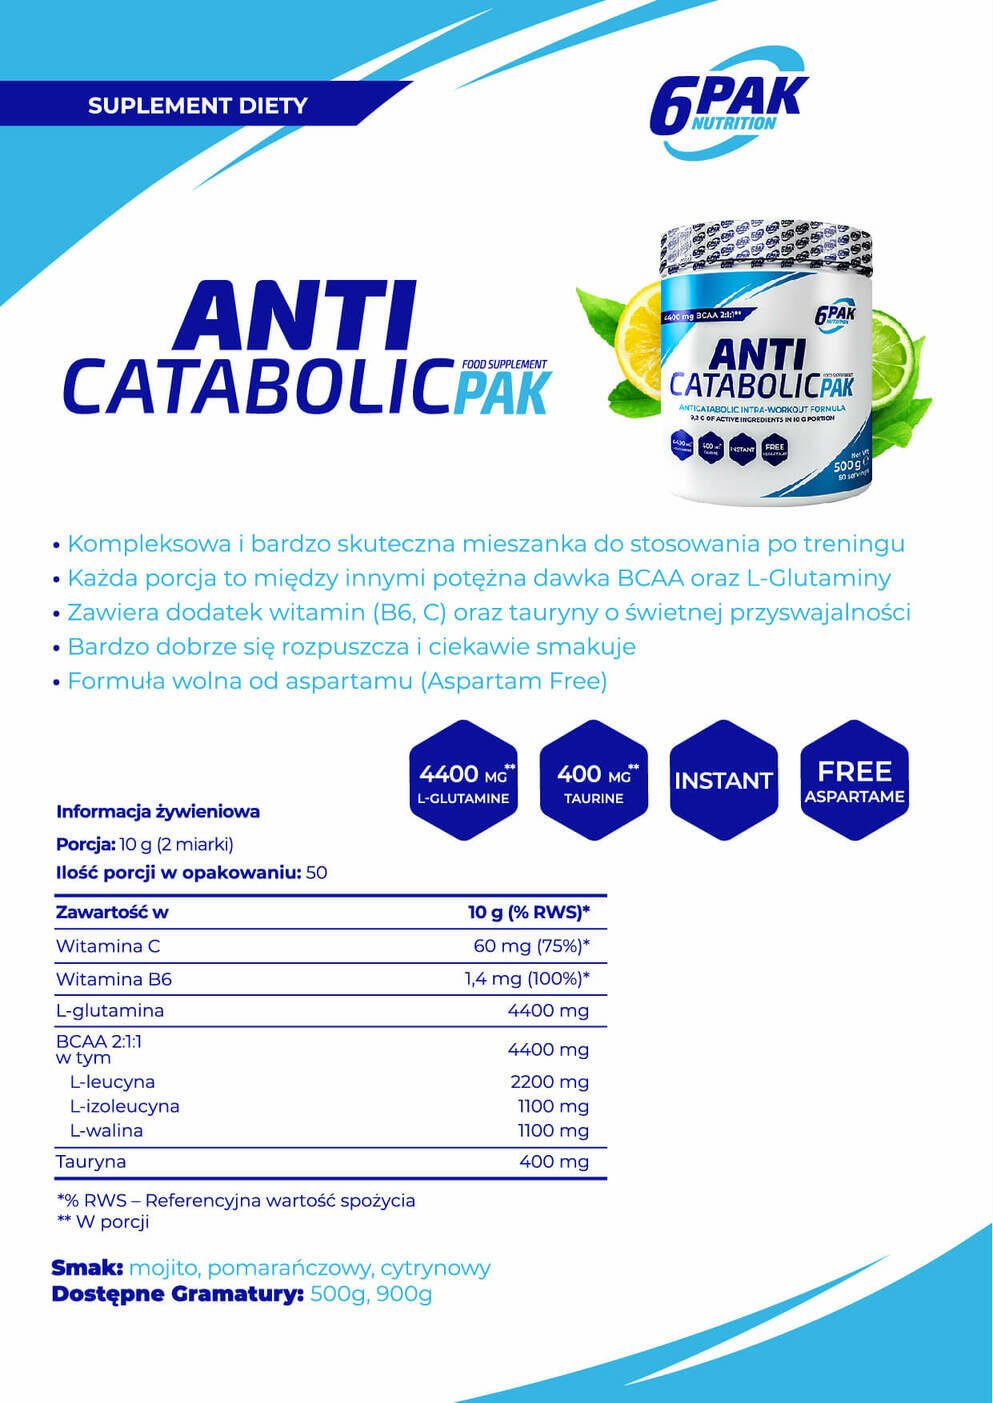 6PAK Nutrition Anticatabolic PAK - 500g